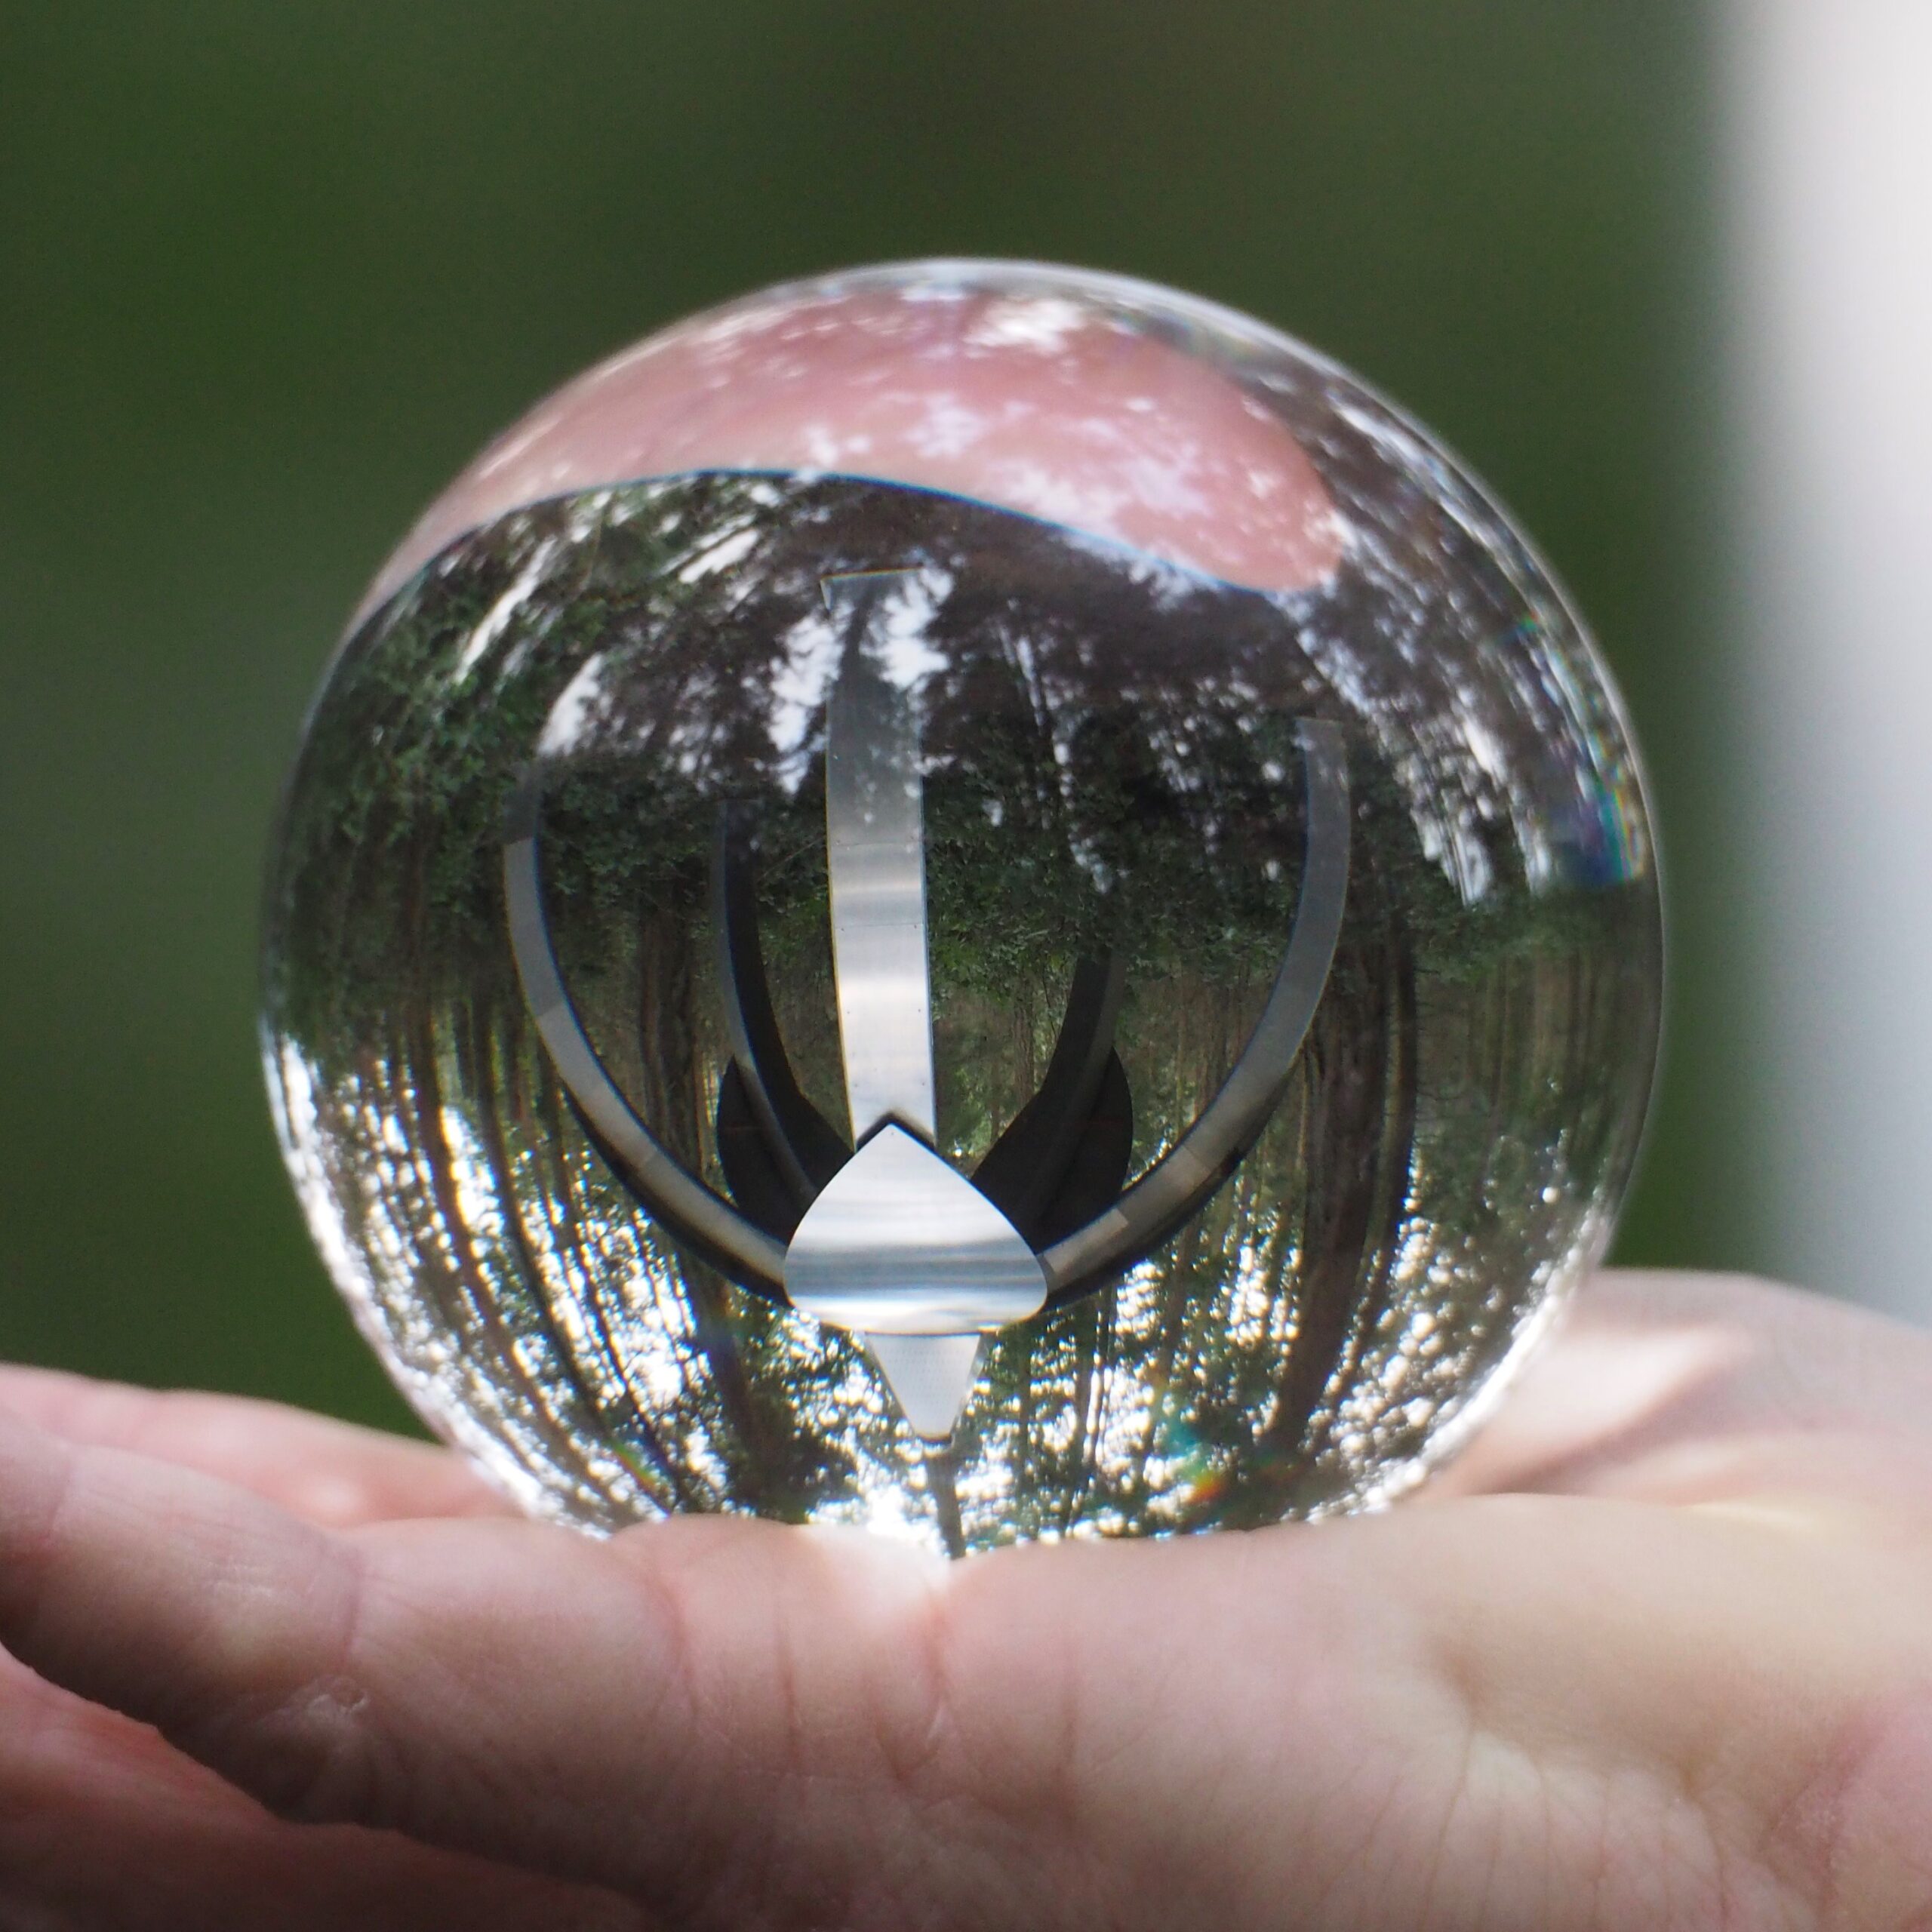 Larry Symons of Bellingham photo of Gary Gunderson Pentillium through glass ball closeup at Price Sculpture Forest